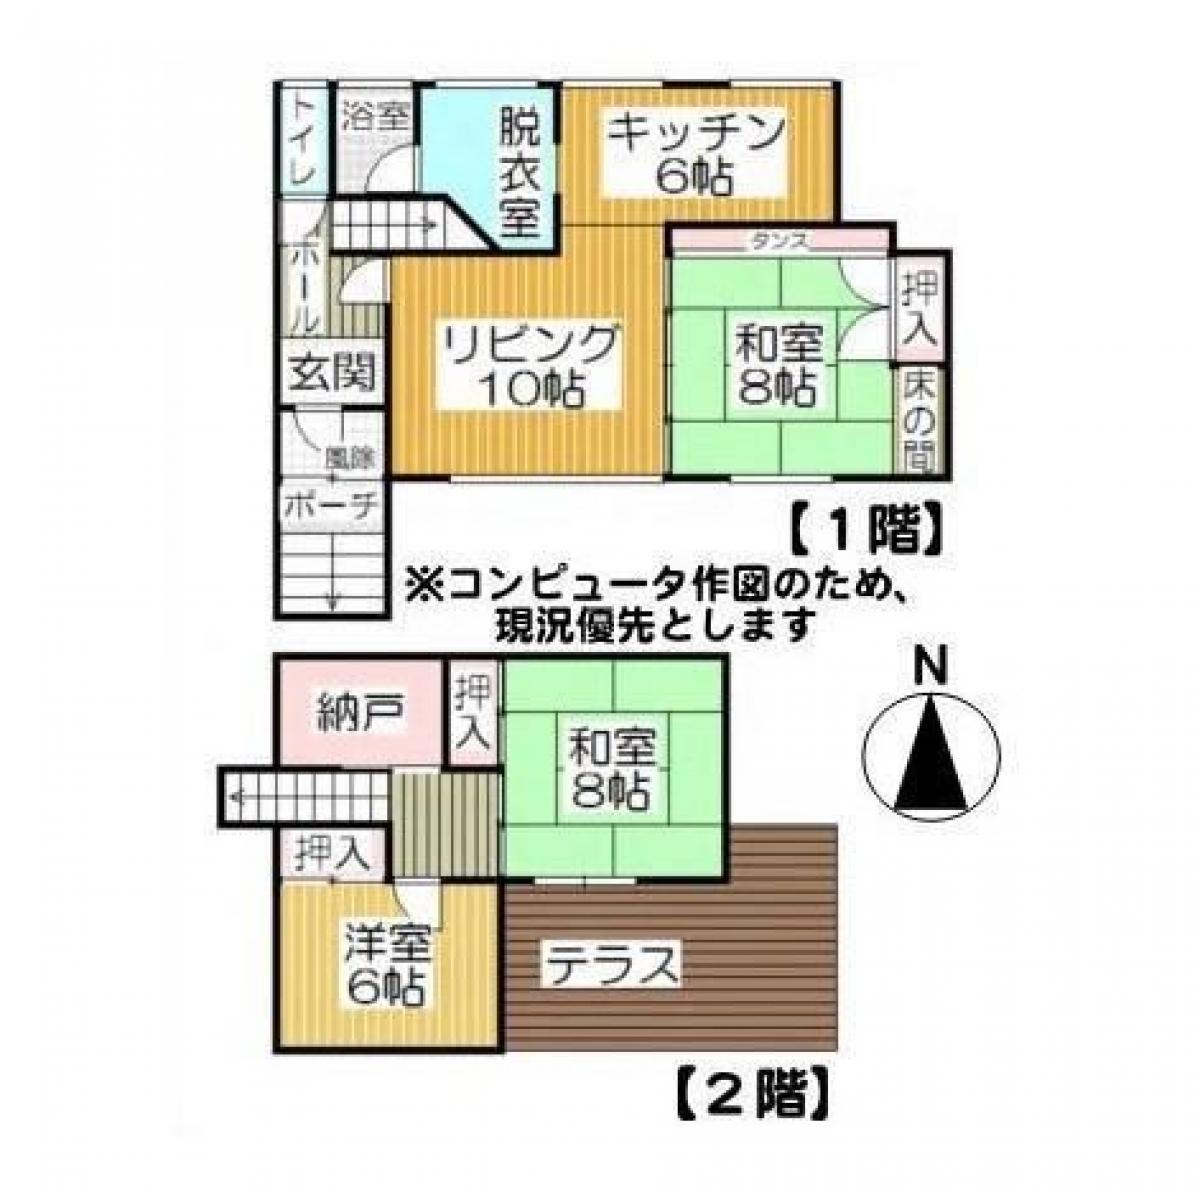 Picture of Home For Sale in Otaru Shi, Hokkaido, Japan